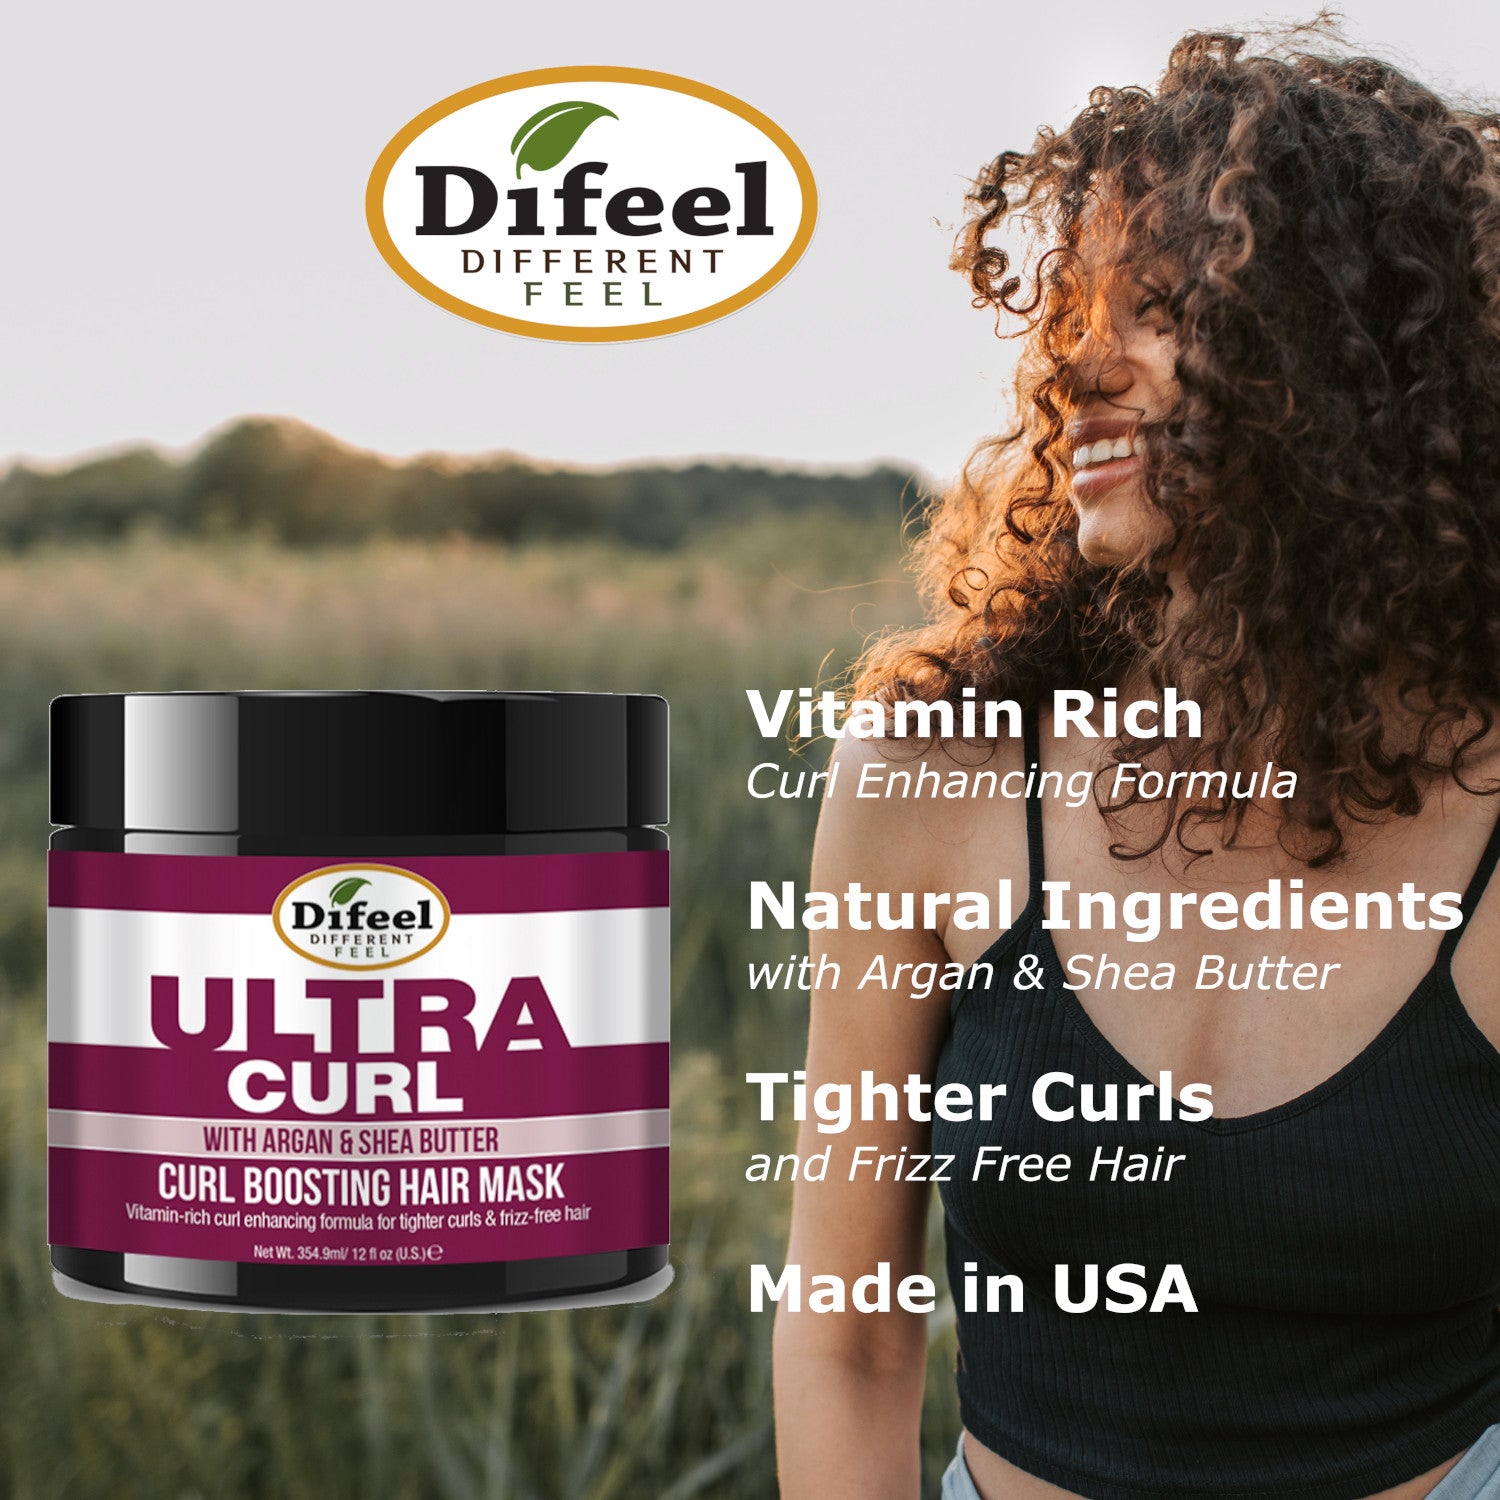 Difeel Ultra Curl with Argan & Shea Butter - Curl Boosting Hair Mask 12 oz.